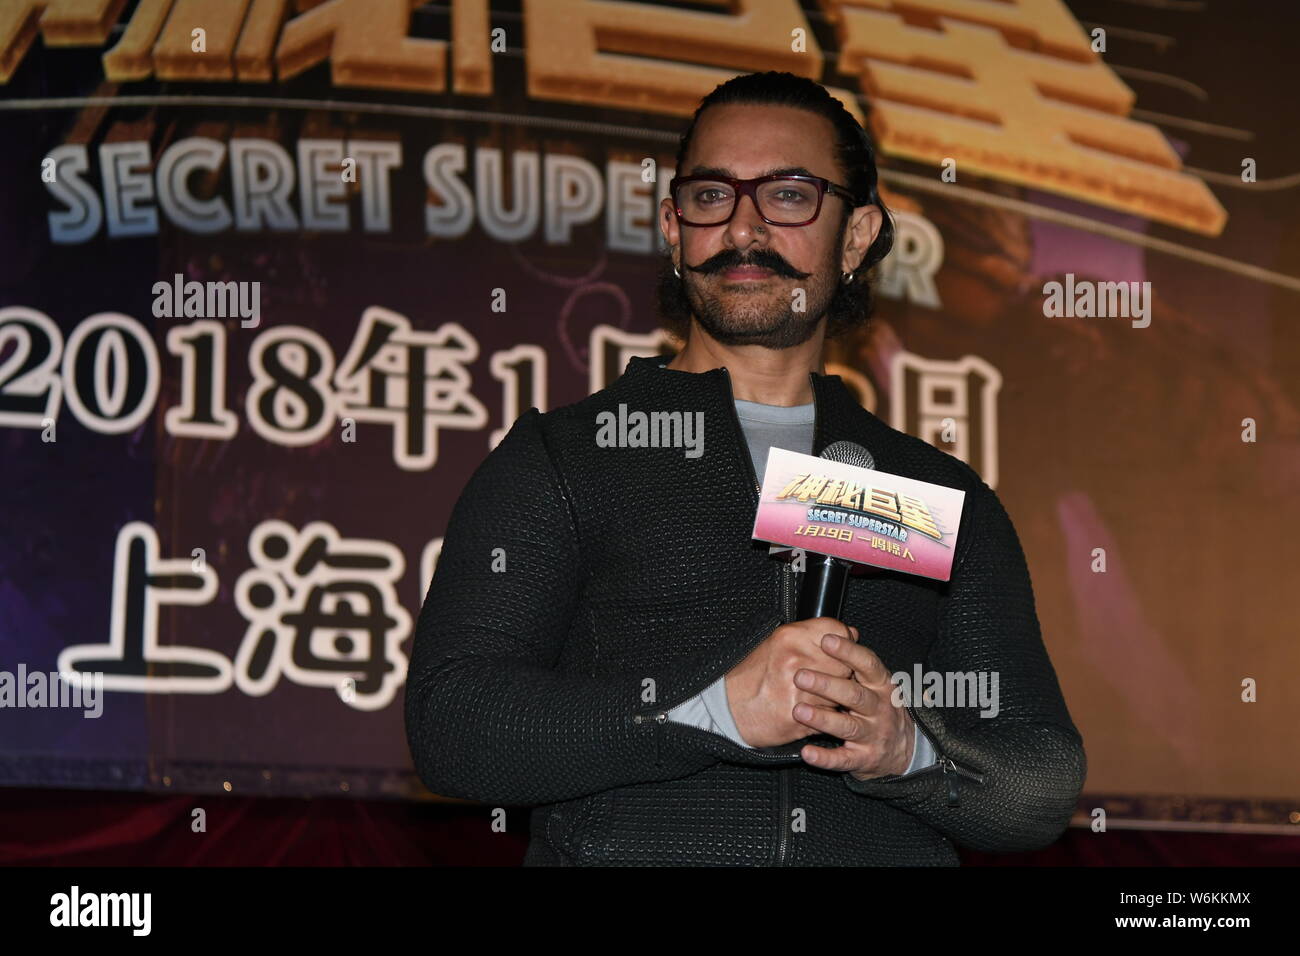 Attore indiano AAMIR KHAN assiste un road show per promuovere il suo nuovo musical film di fiction "secret Superstar' in Cina a Shanghai, 22 gennaio 2018. Foto Stock